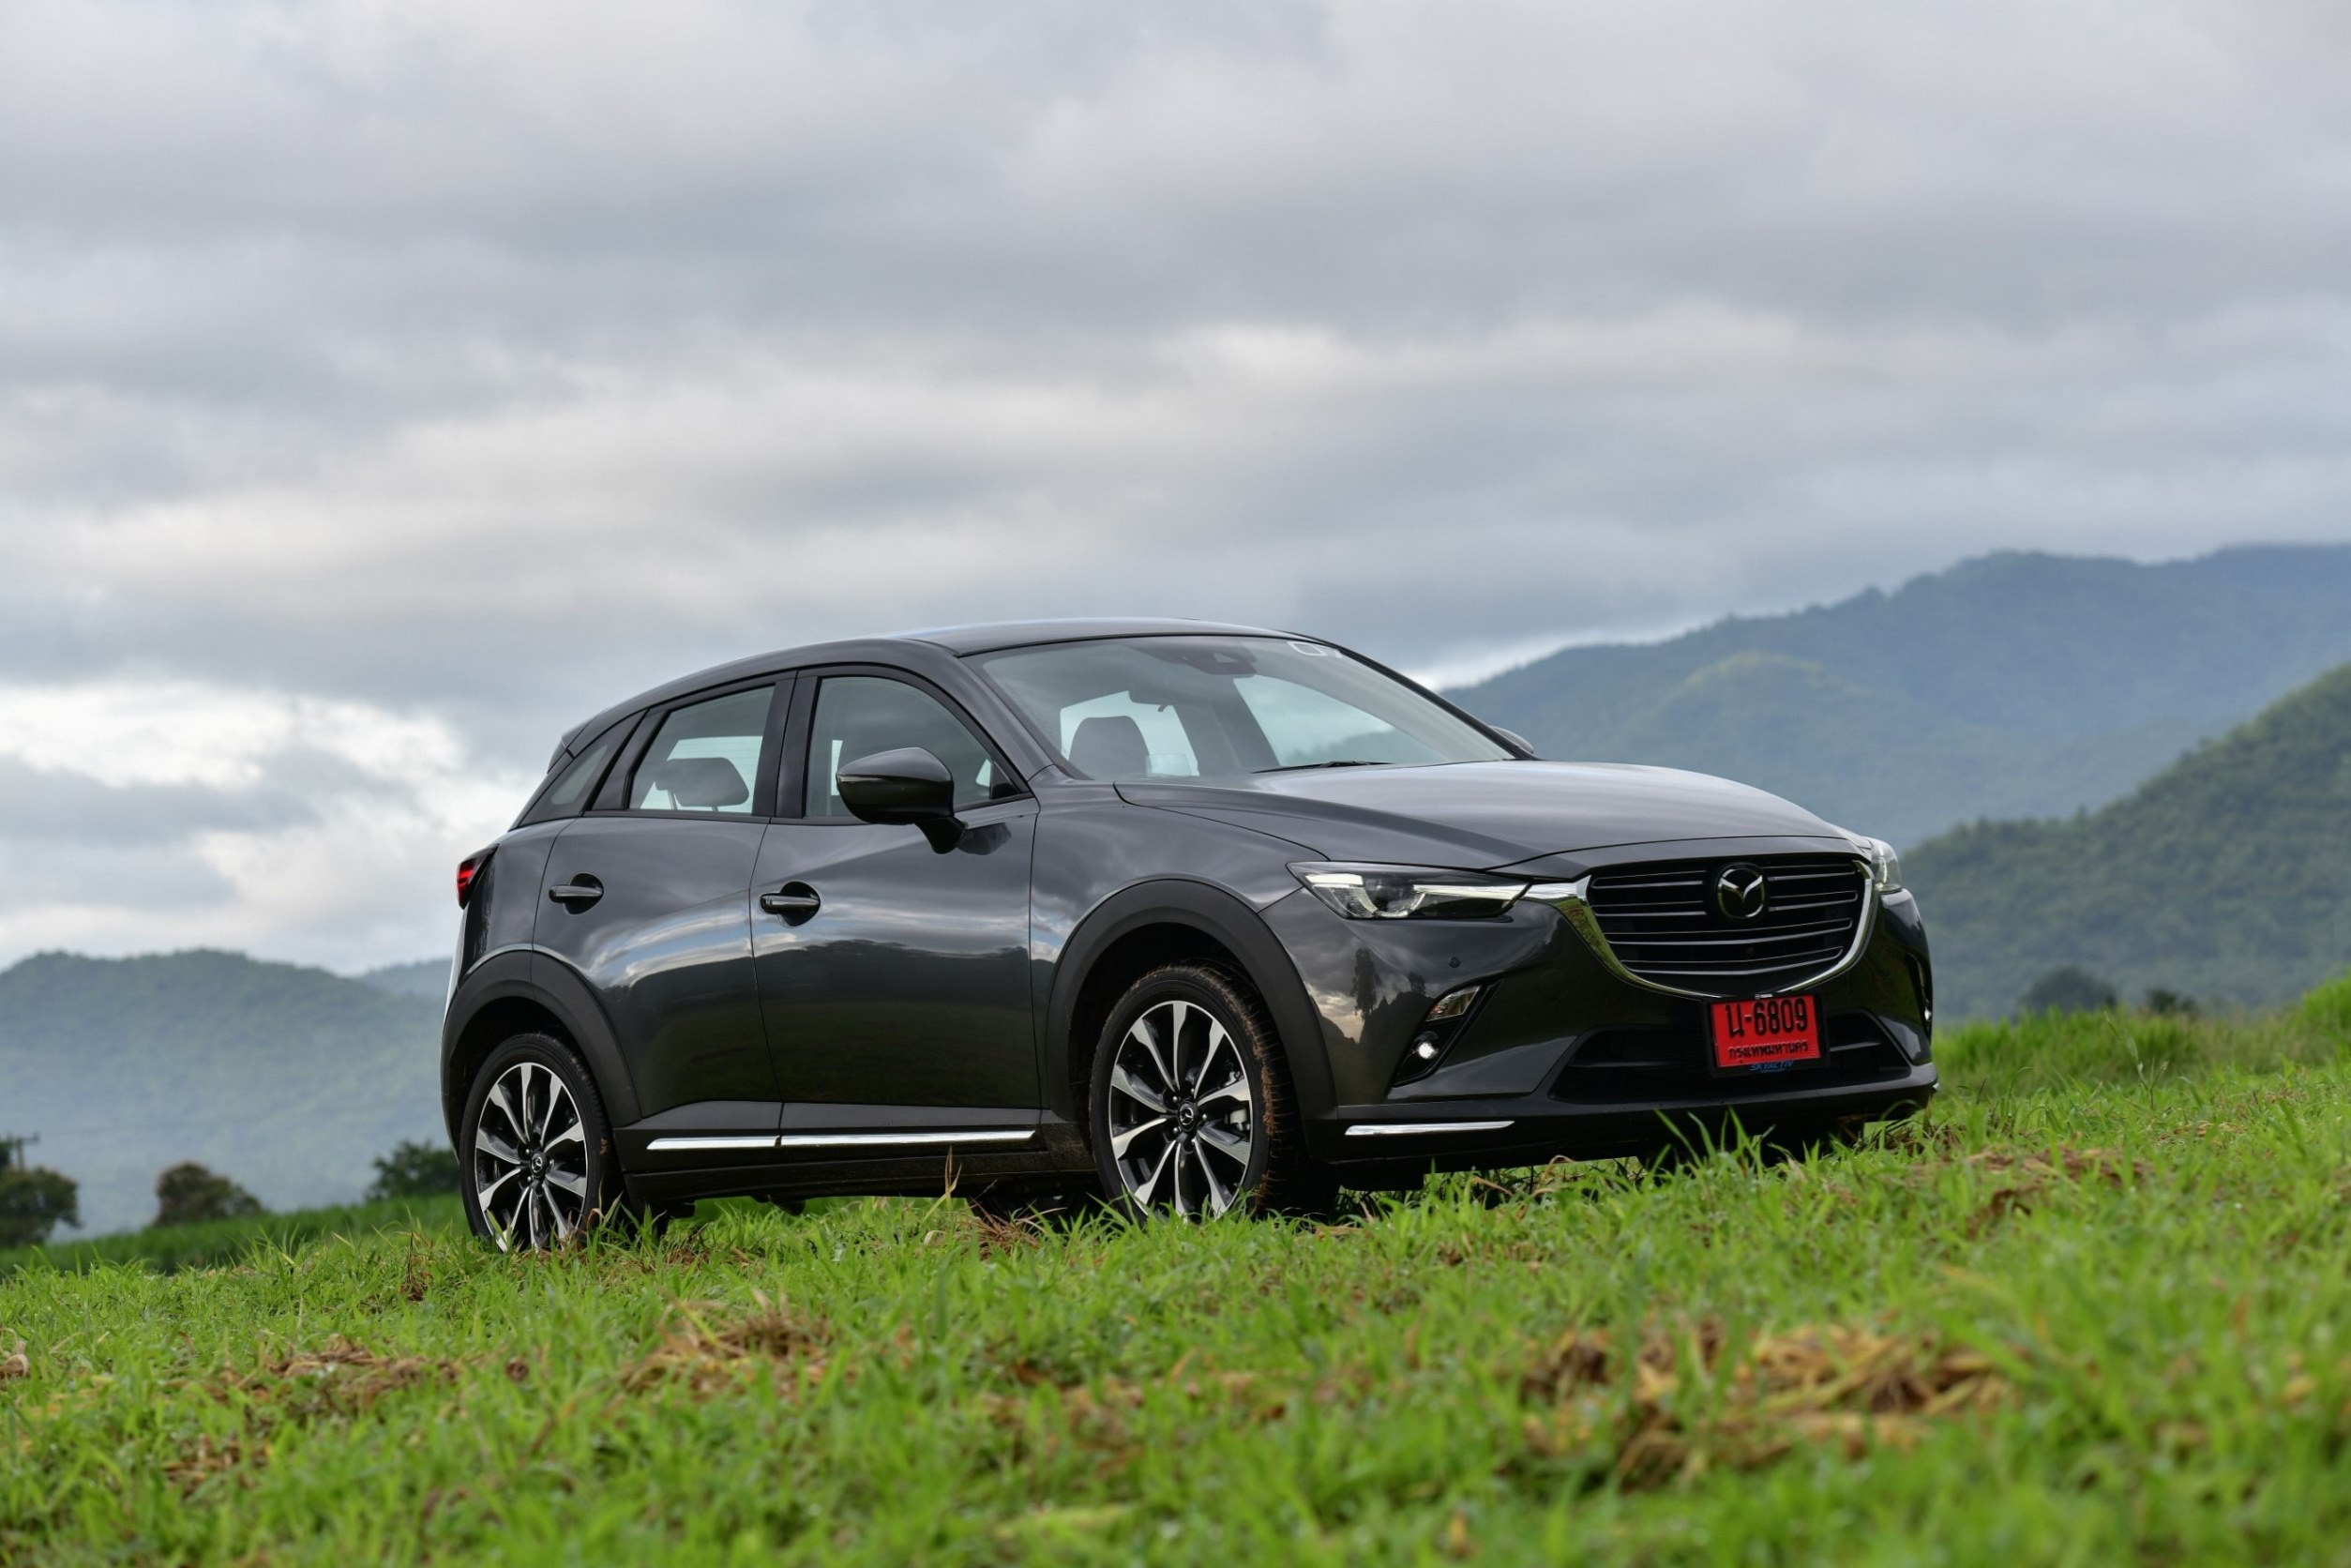 Mazda SUV Recorded as Best Seller in April